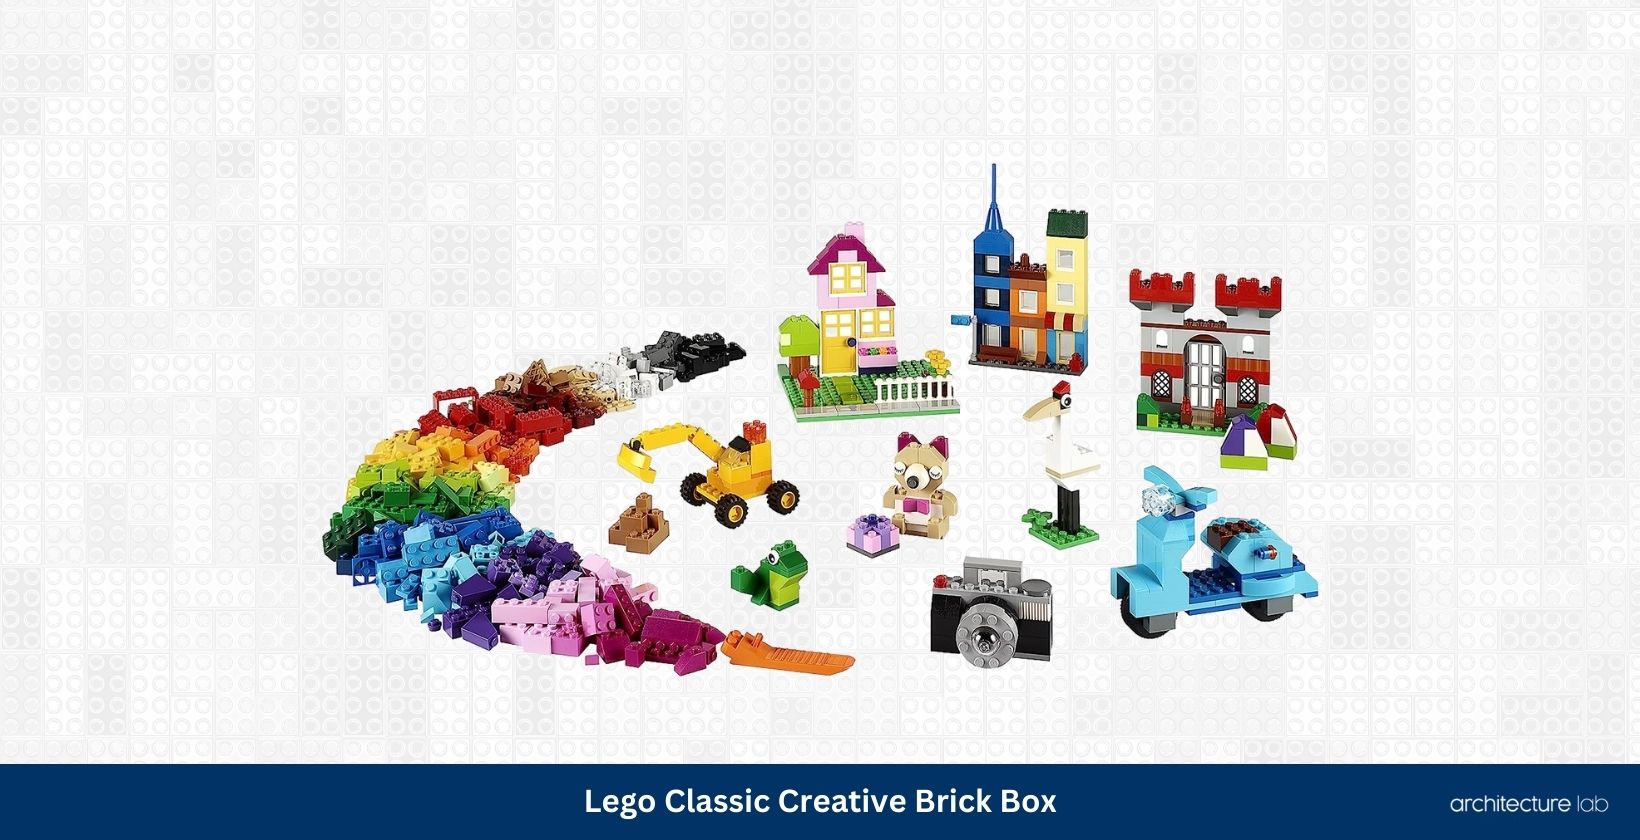 Lego classic creative brick